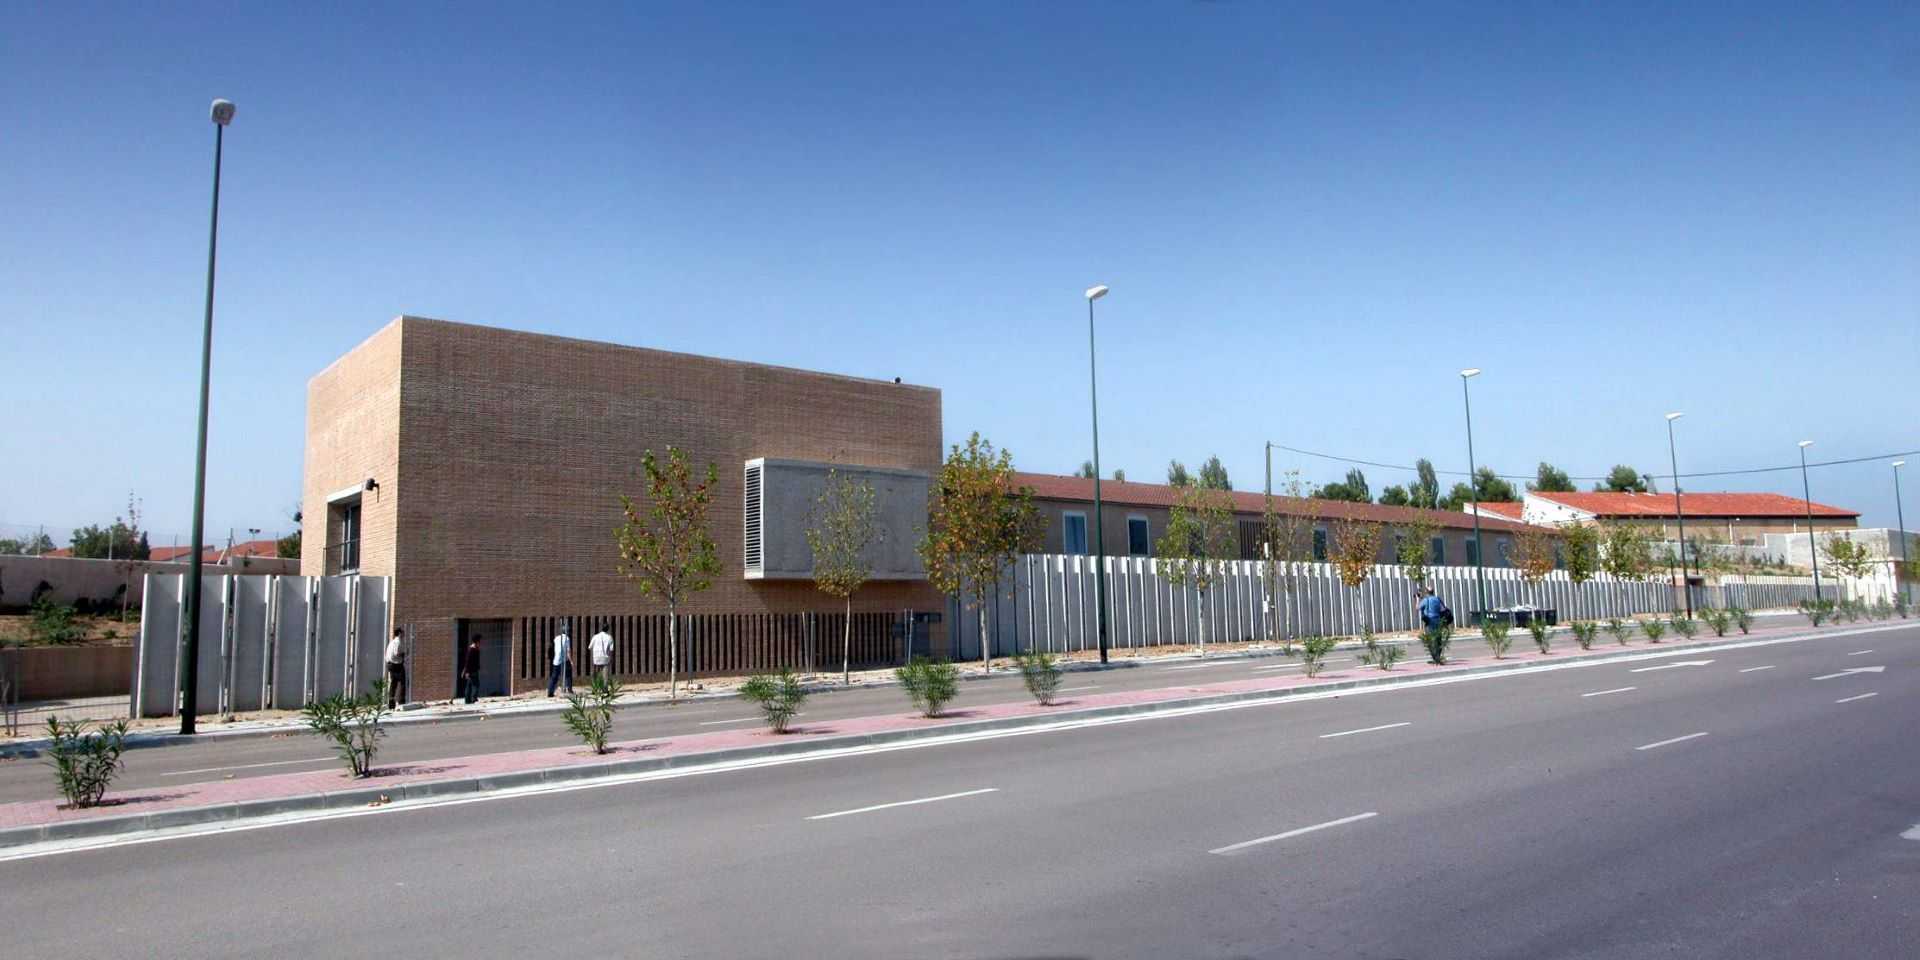 Centro de Salud "Miralbueno", Zaragoza